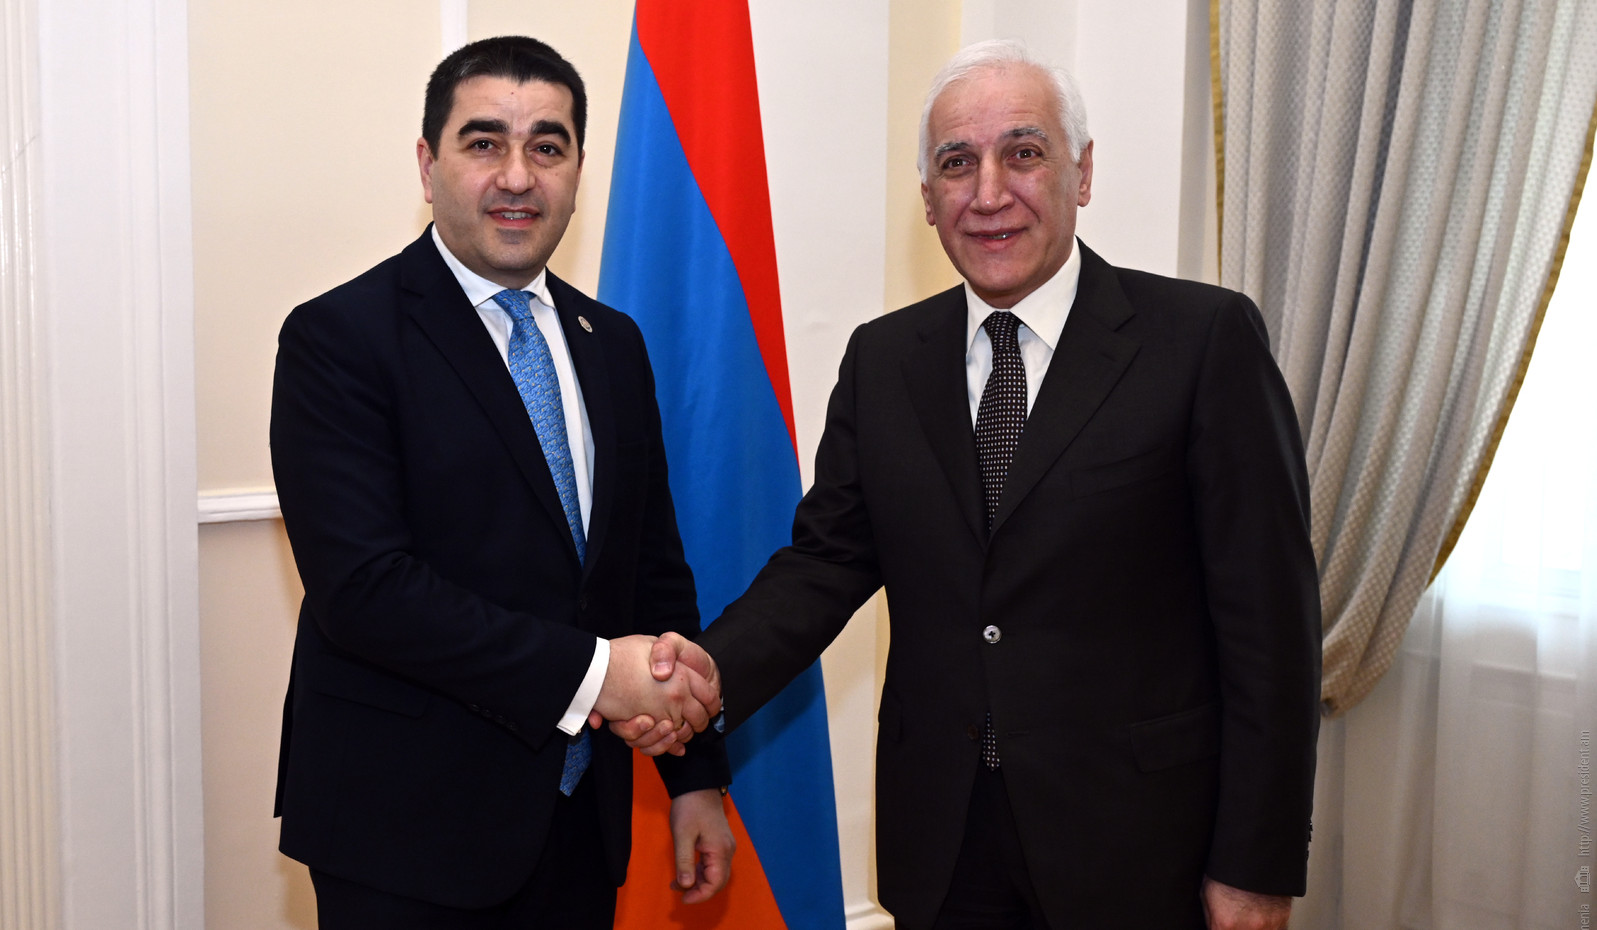 President of Armenia presented to President of Georgia’s Parliament efforts of Armenia aimed at establishing long-term peace